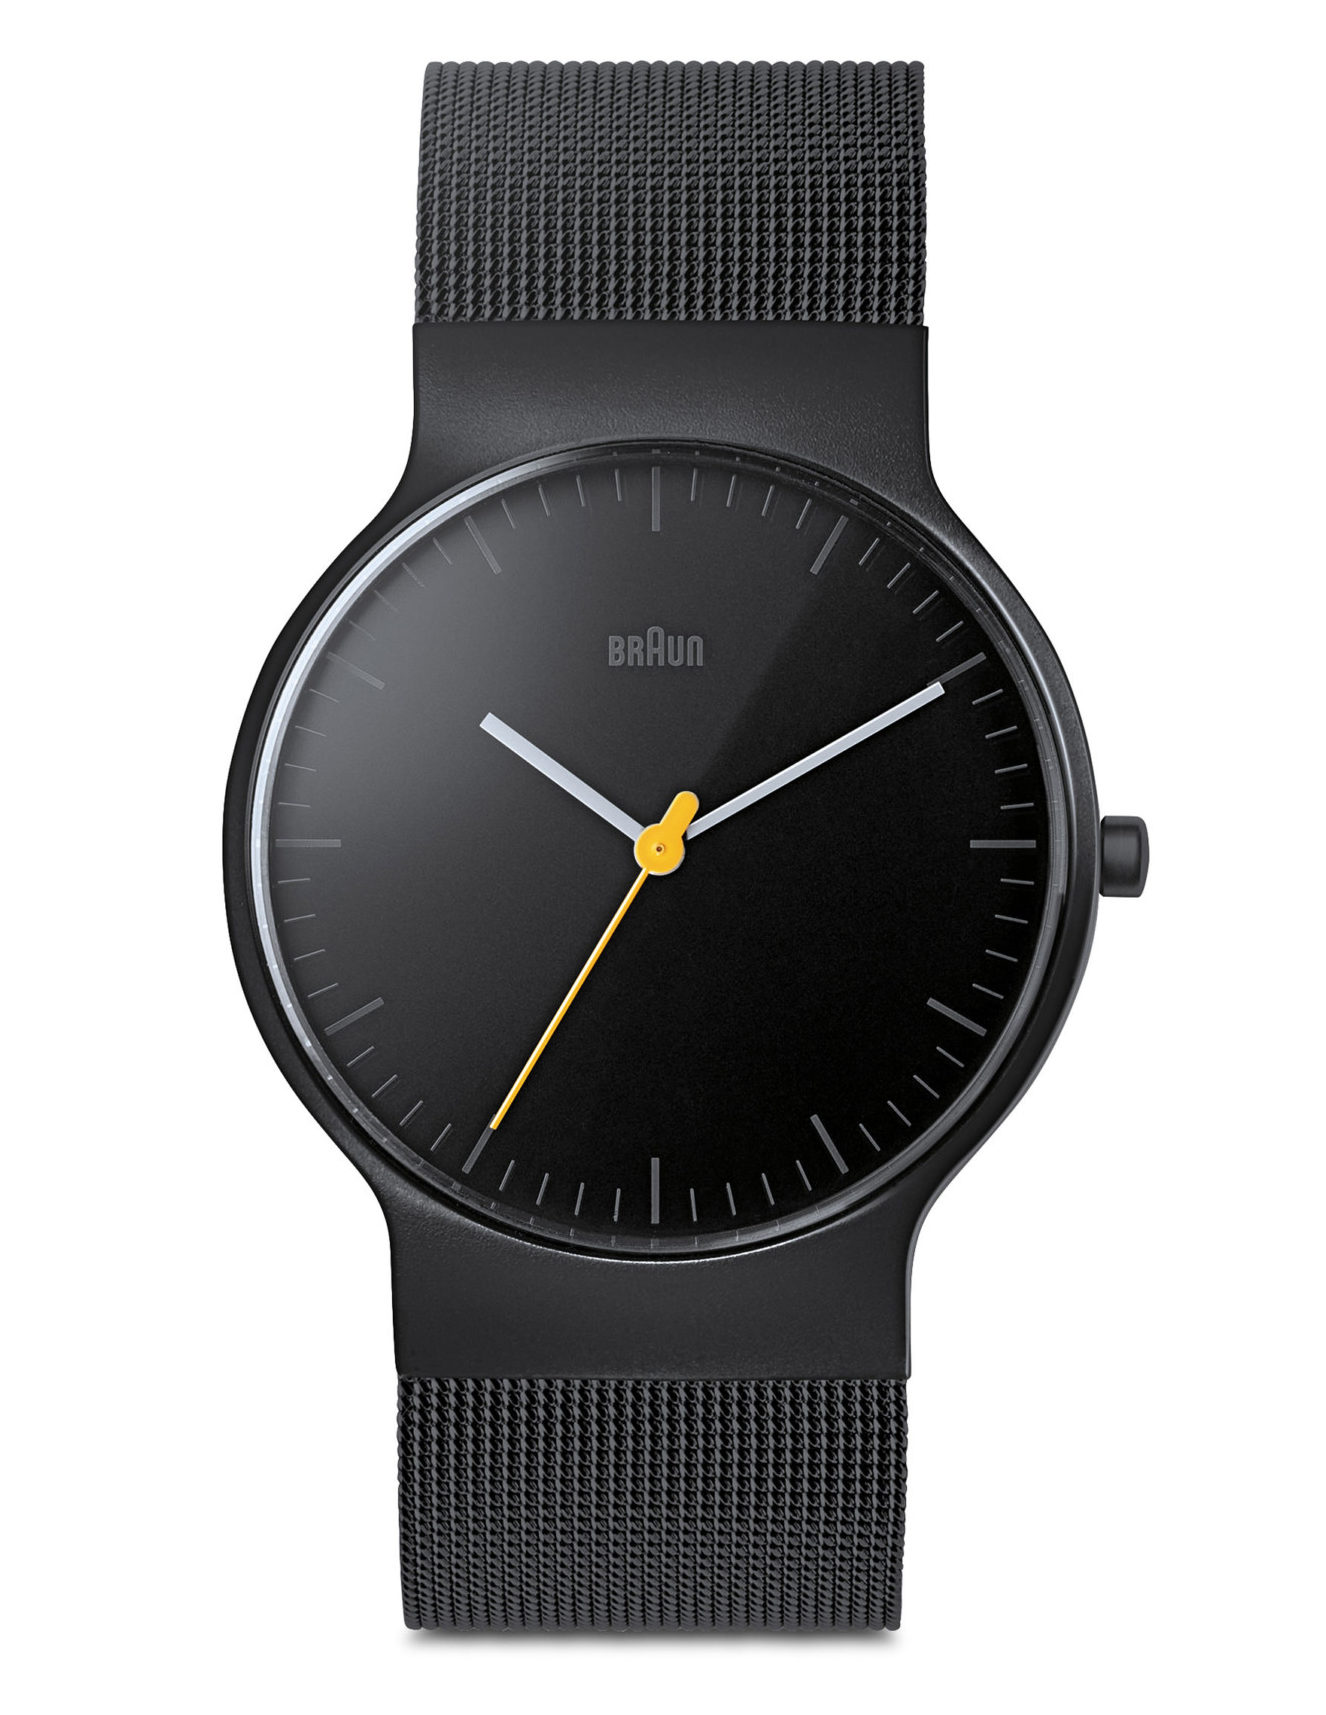 Braun Classic Slim Watch Wins Prestigious Red Dot Award For Design